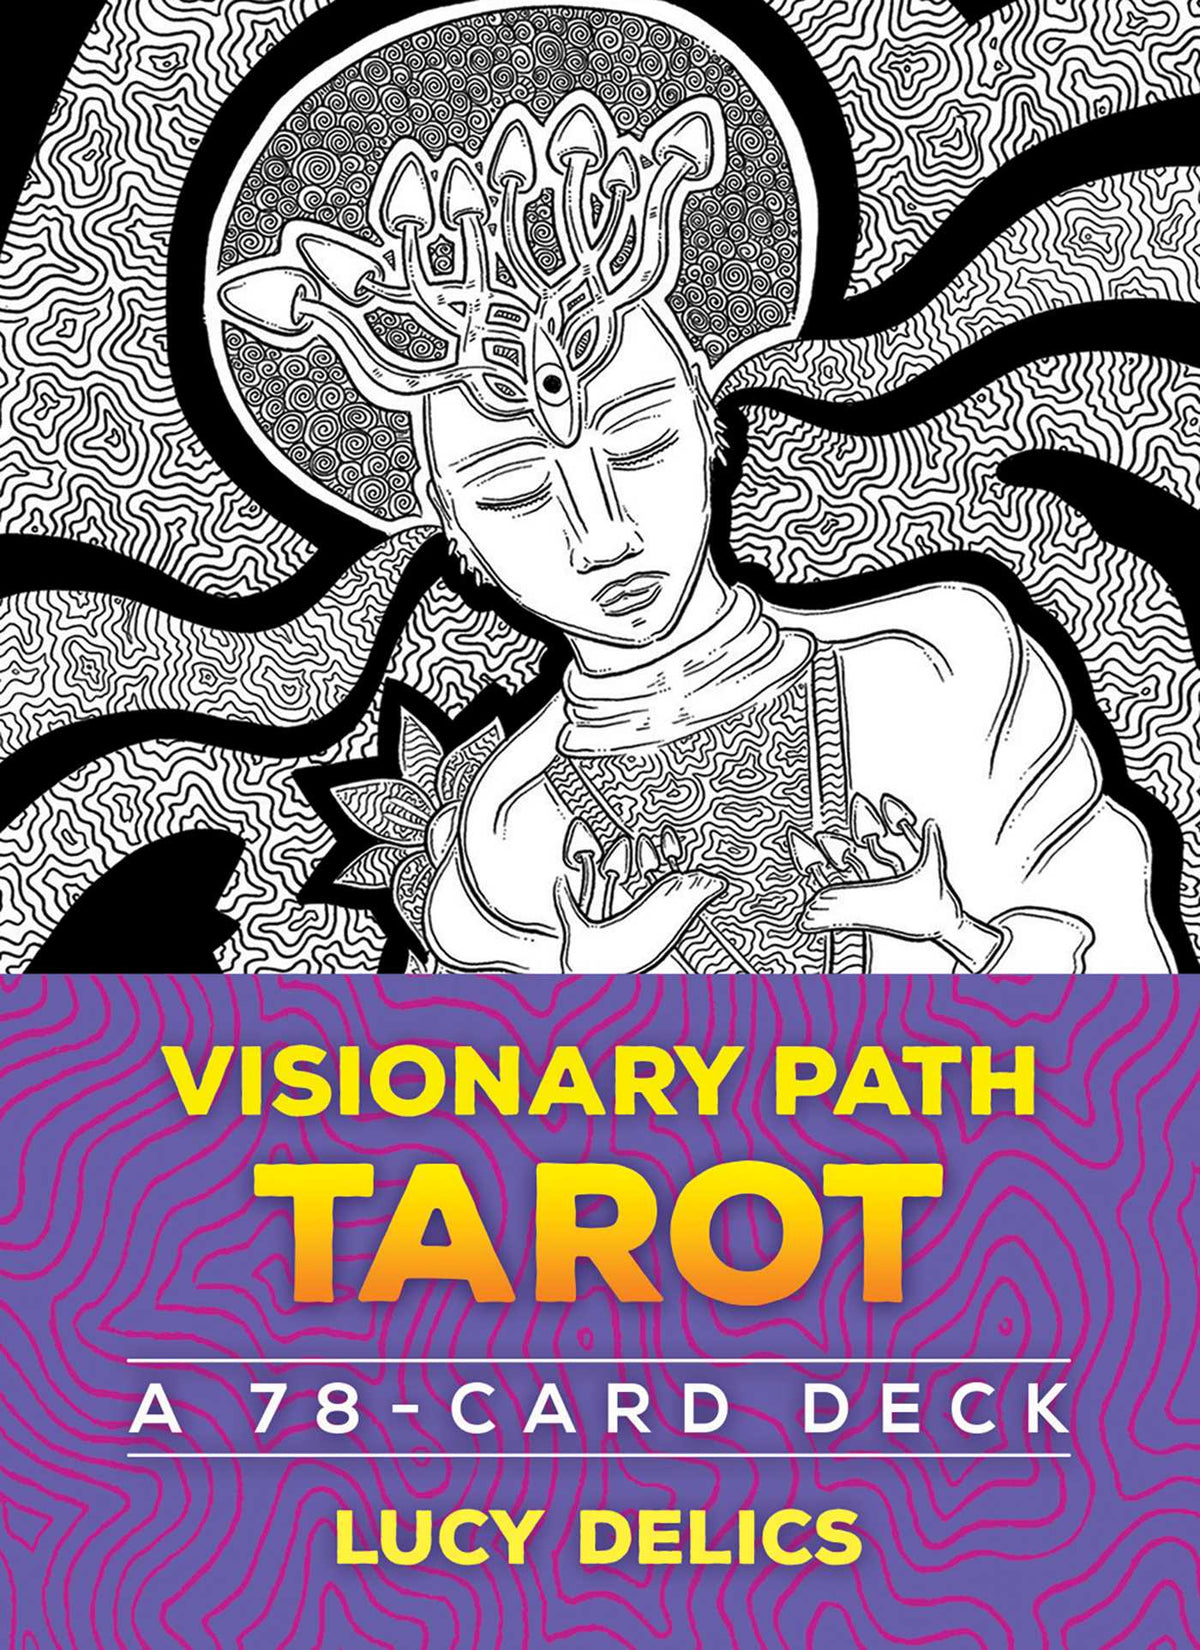 Simon and Schuster Visionary Path Tarot